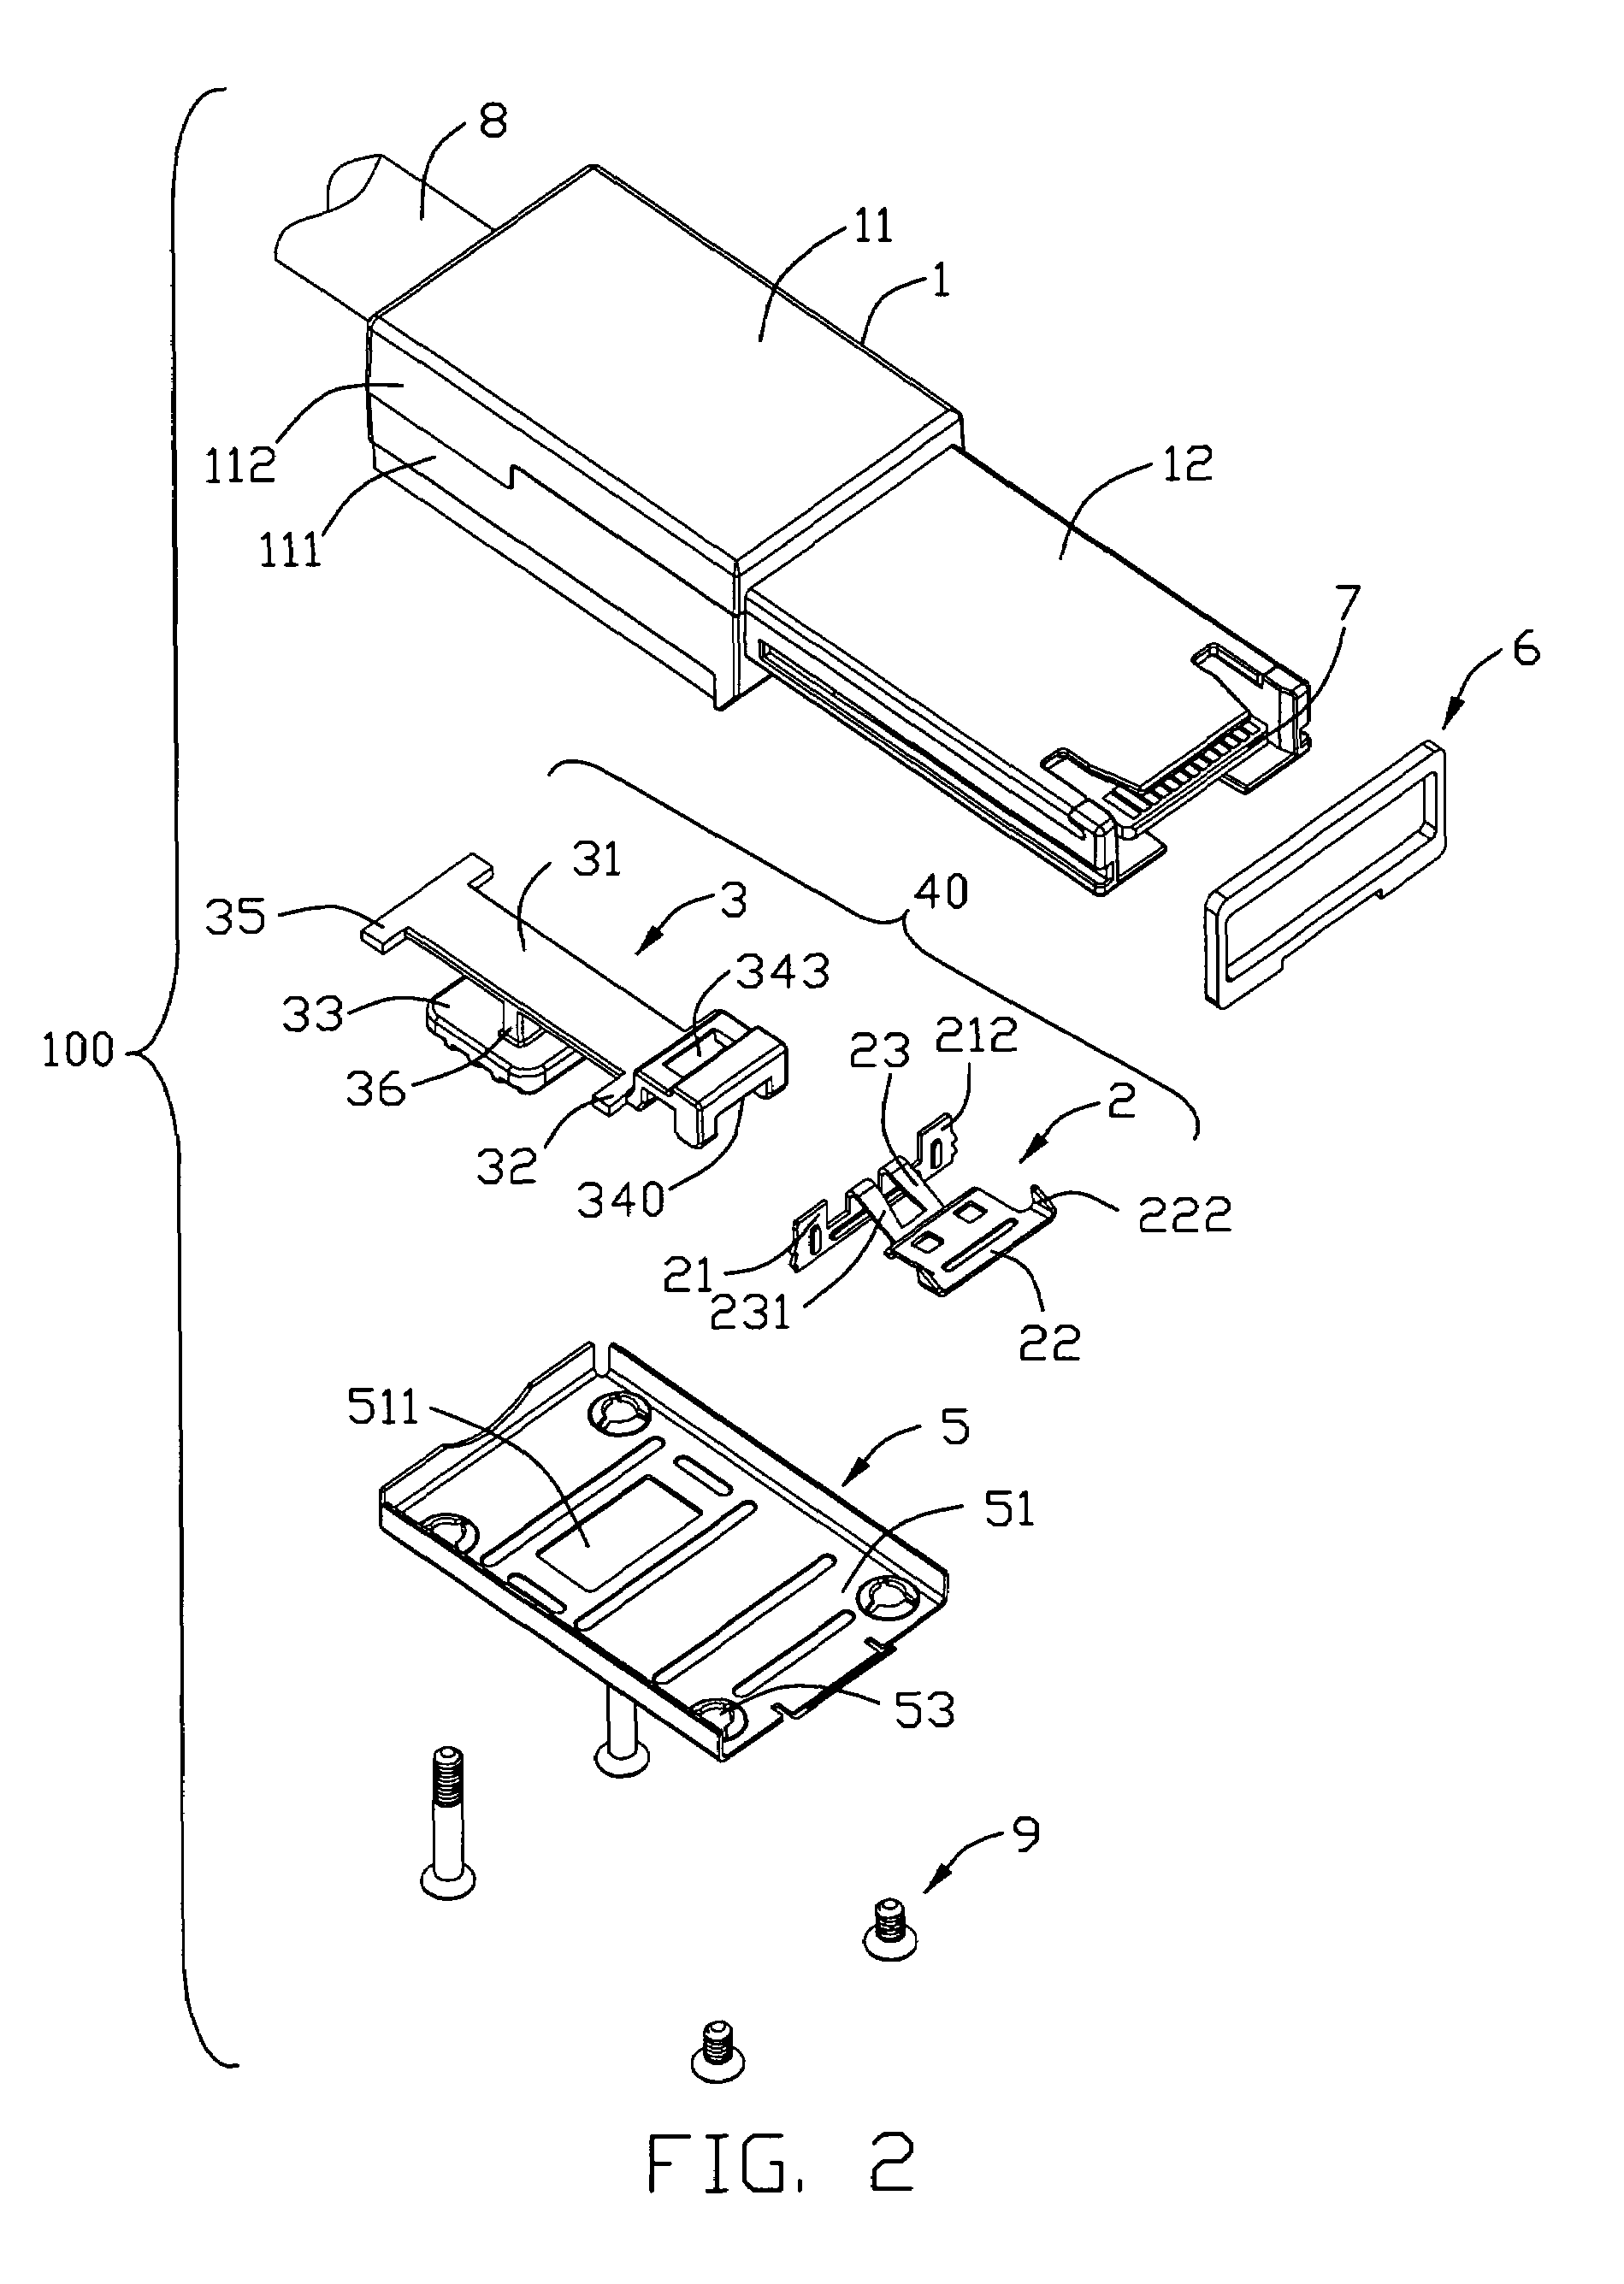 Plug connector having a latching mechanism